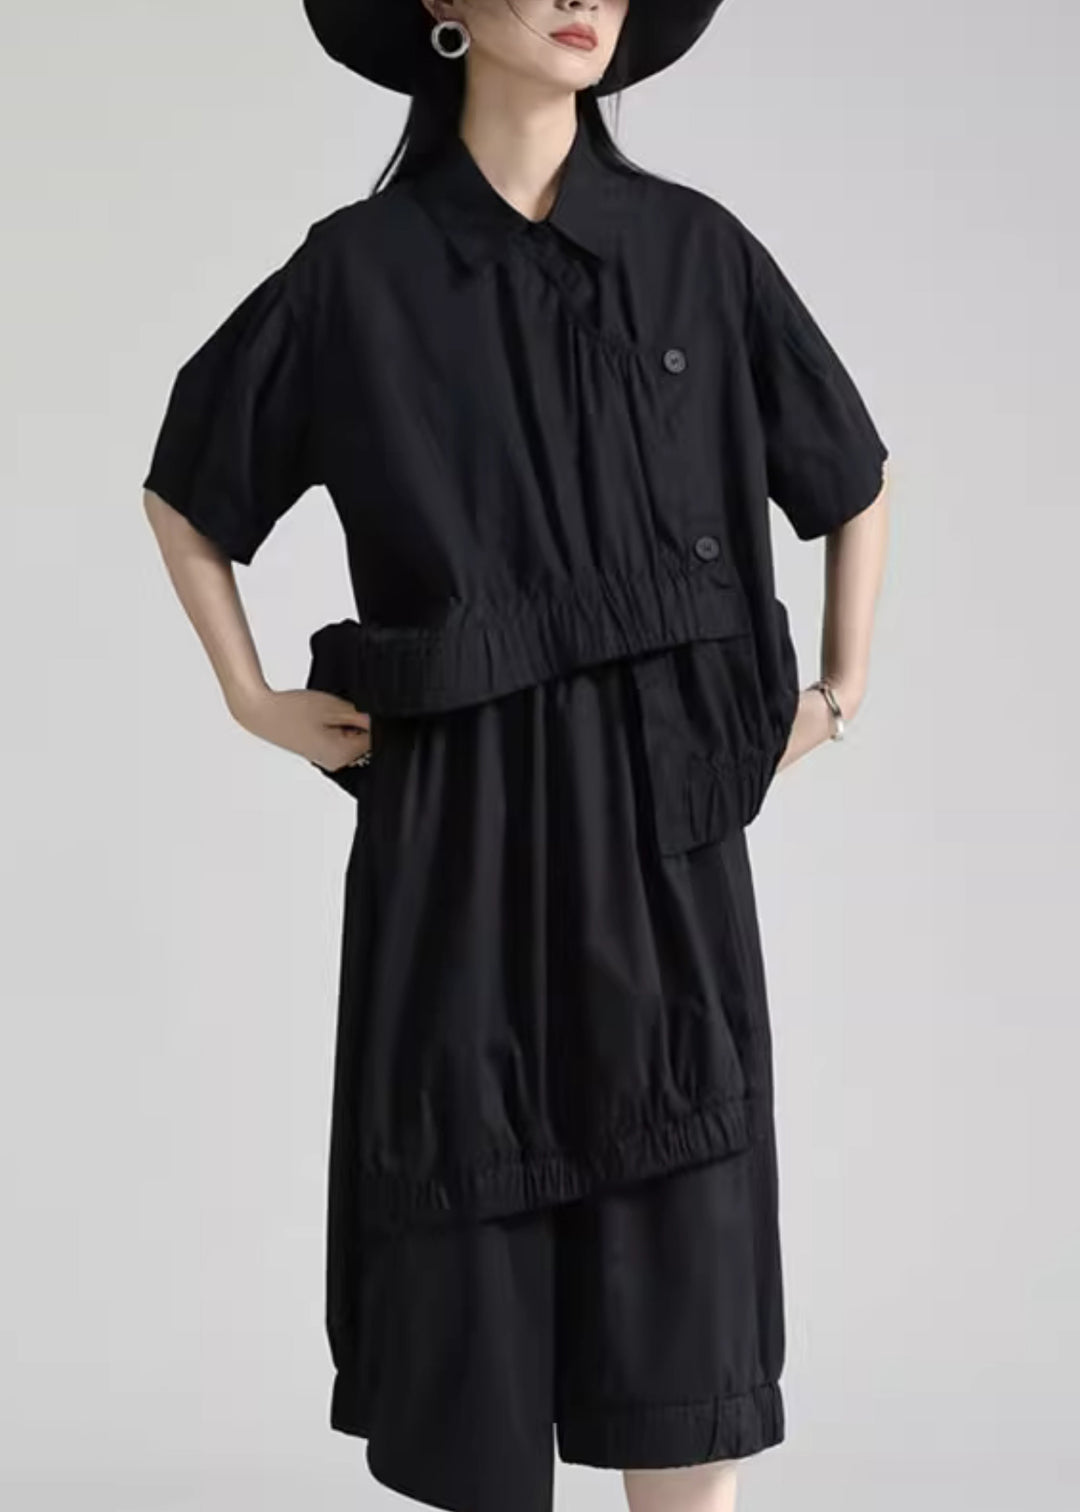 Style Black Asymmetrical Patchwork Cotton Shirt Tops Short Sleeve